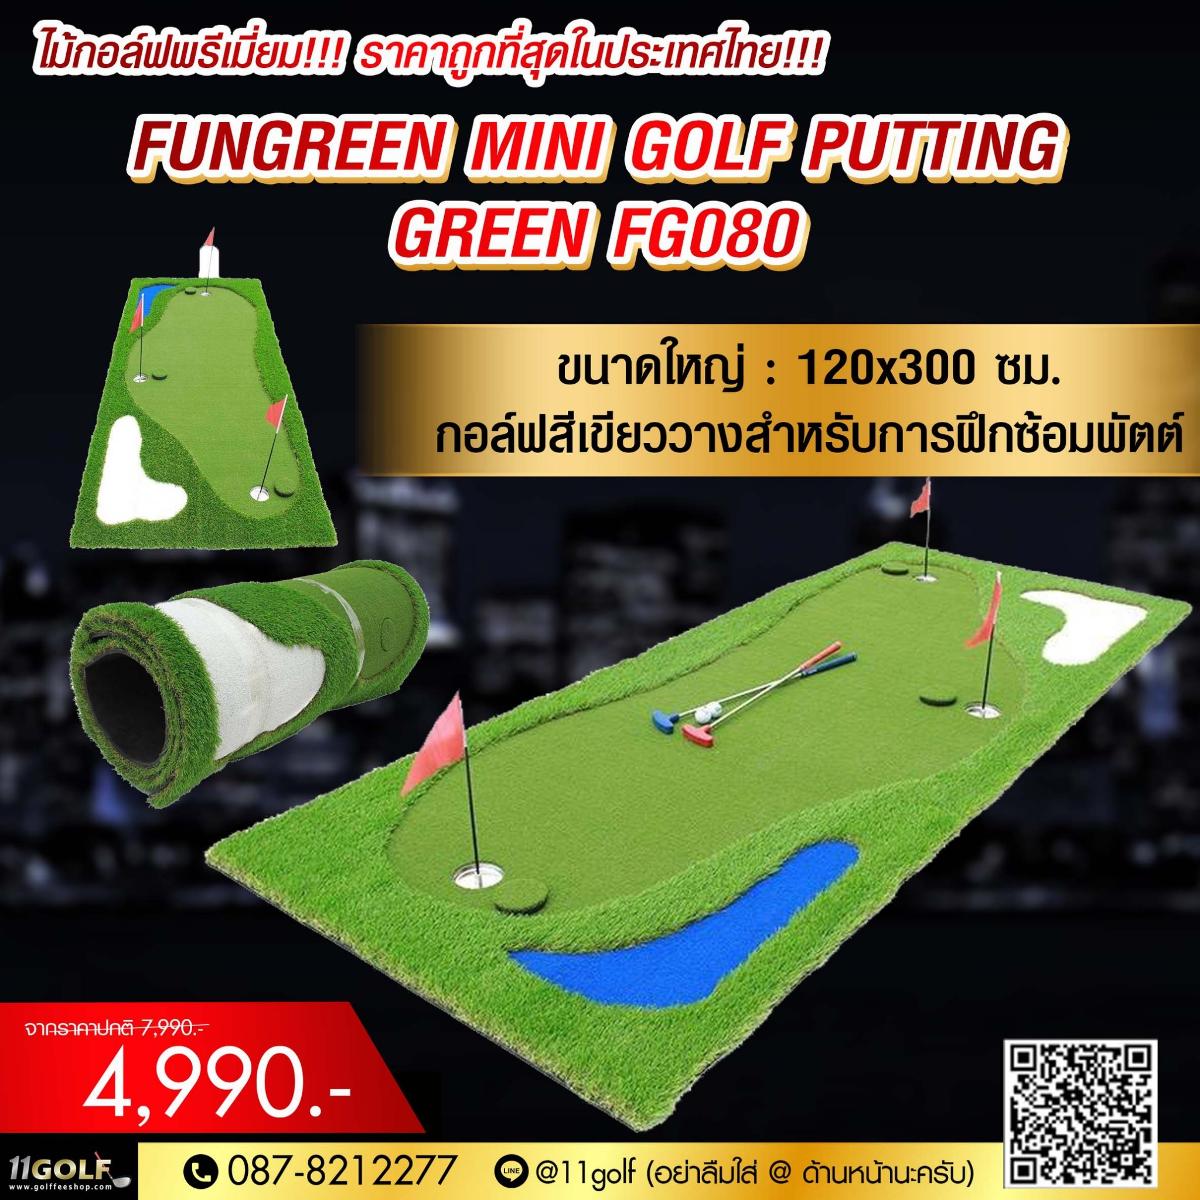 FG080 ไม้กอล์ฟพรีเมี่ยม!!! ราคาถูกที่สุดในประเทศไทย!!! FUNGREEN MINI GOLF PUTTING GREEN